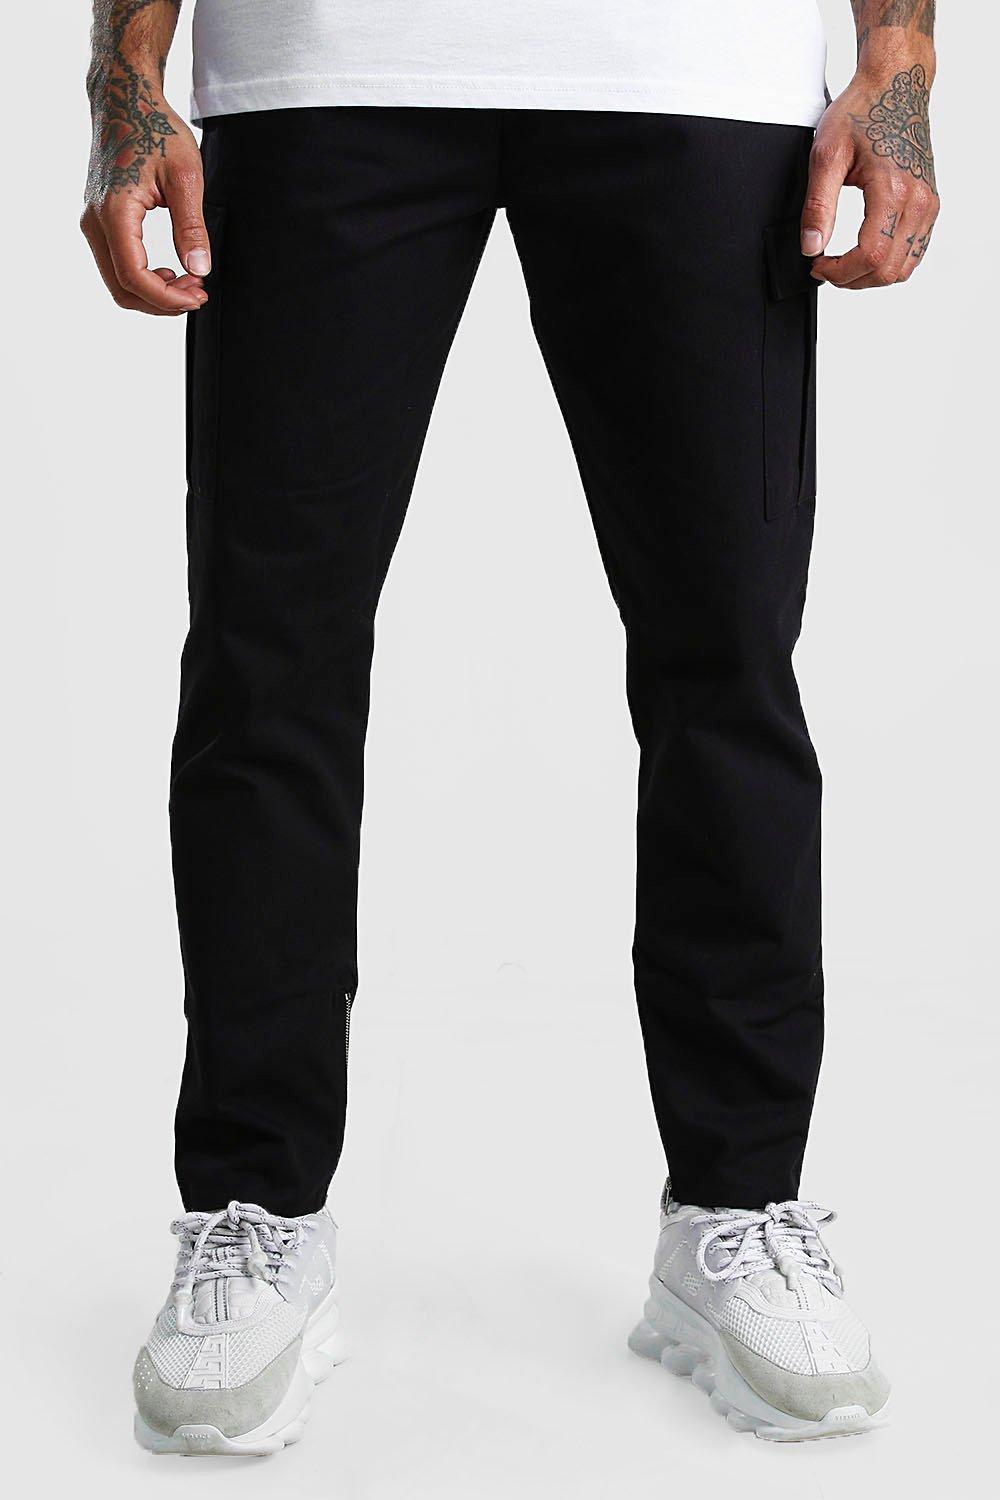 Nike Twill Cargo Pant in Black